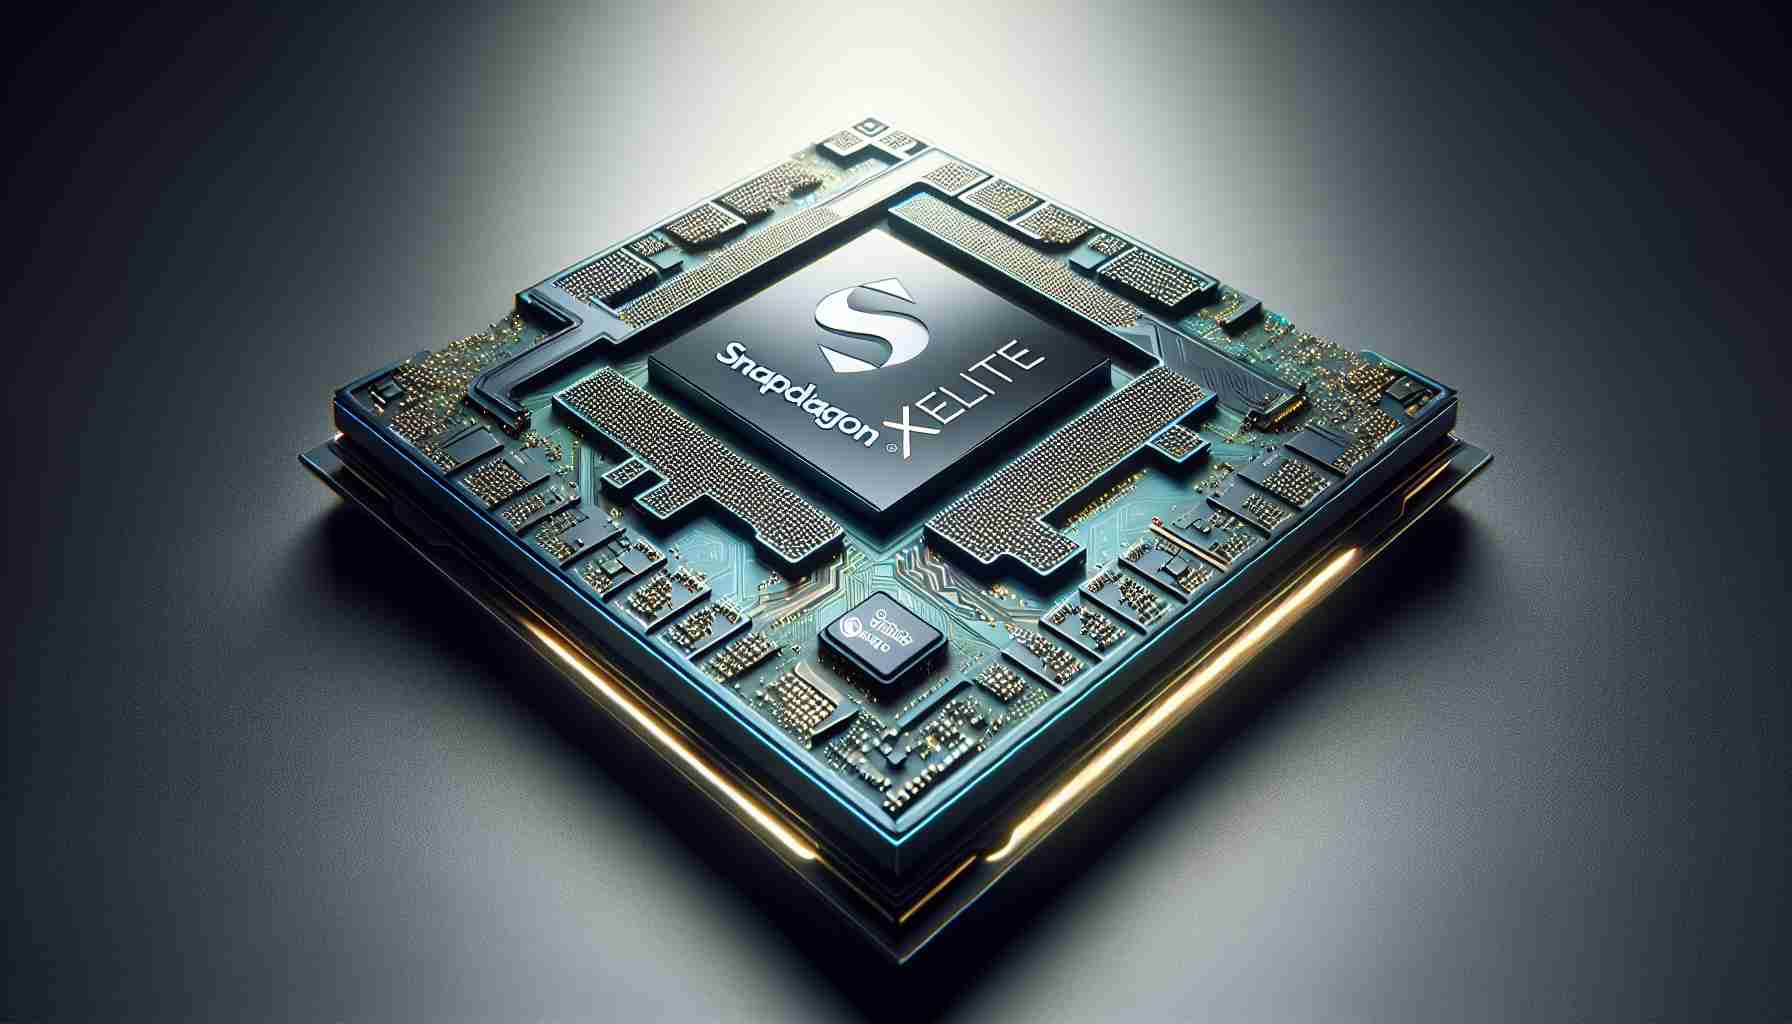 Qualcomm’s Snapdragon X Elite SKUs Make Waves with Lenovo Partnership